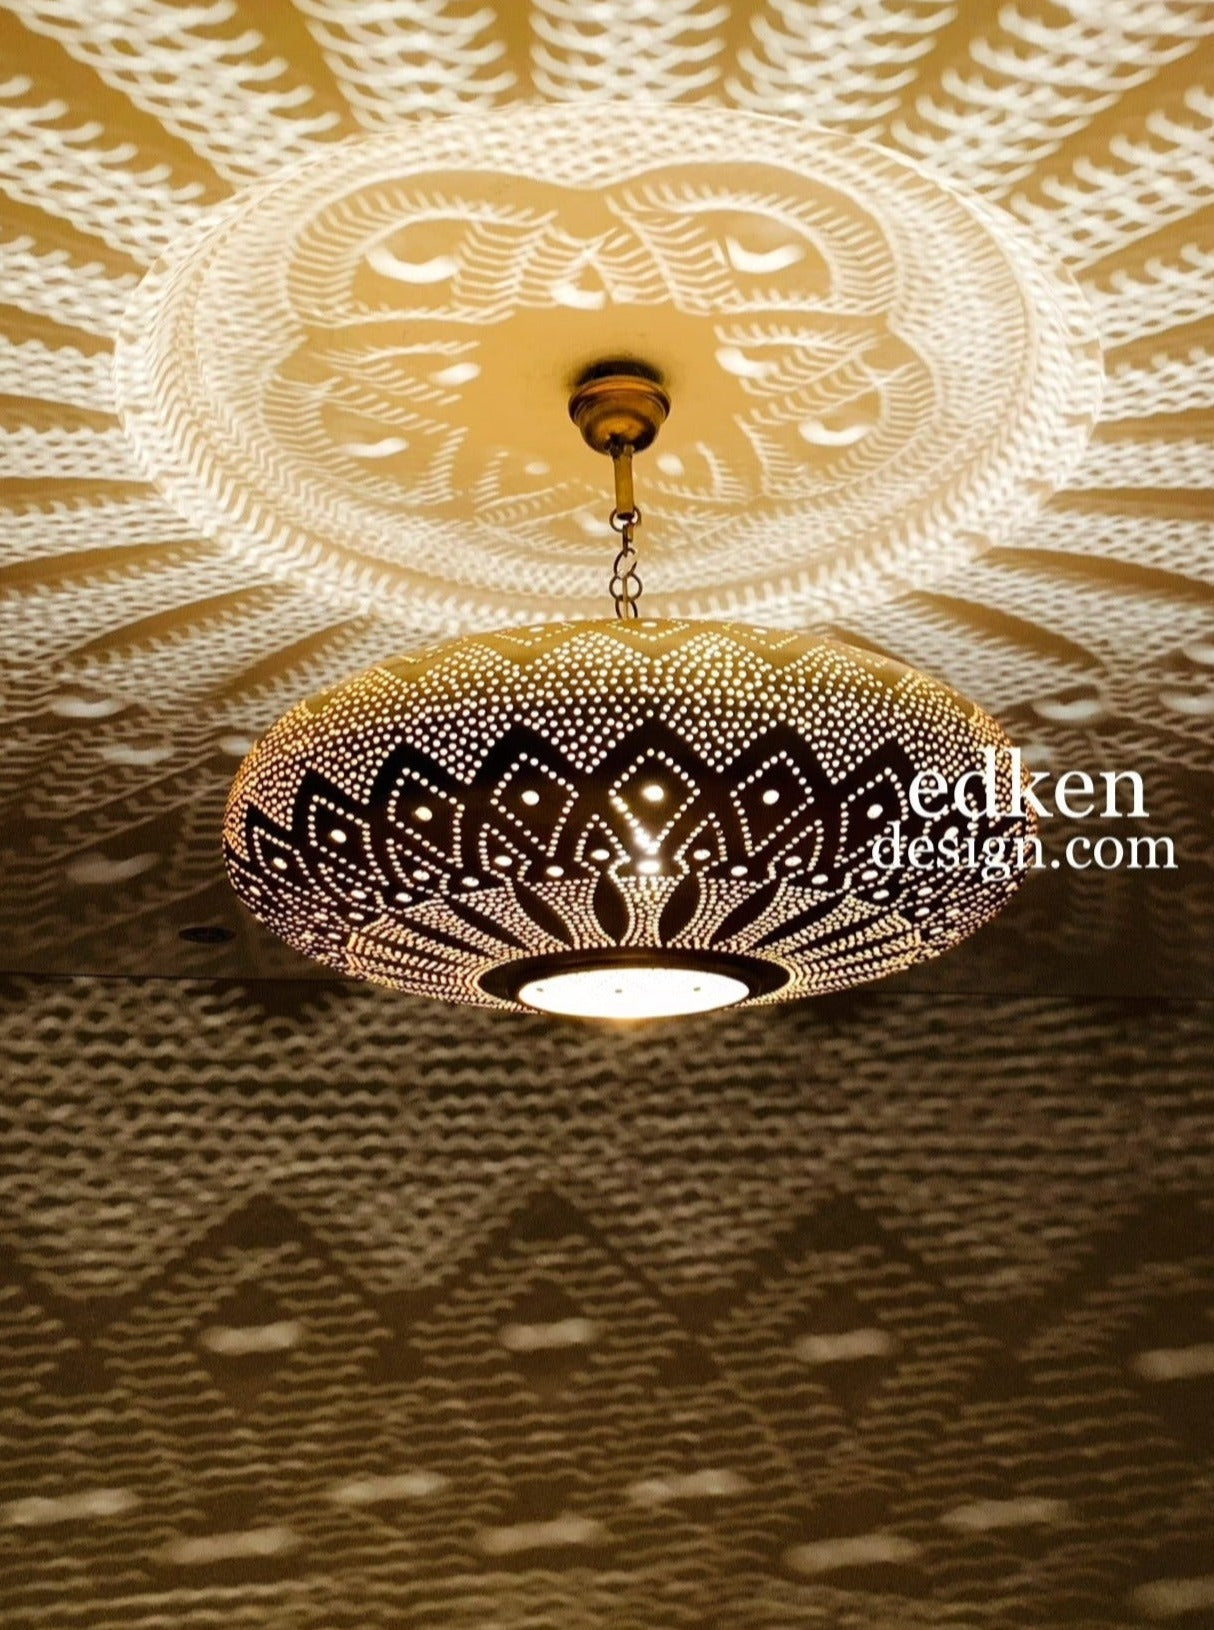 EDKEN LIGHTS - Morocco Ceiling Lamp Shades Fixture pierced Brass Lozenge Hanging Lights Handmade Brass Morocco Home Decor Lighting